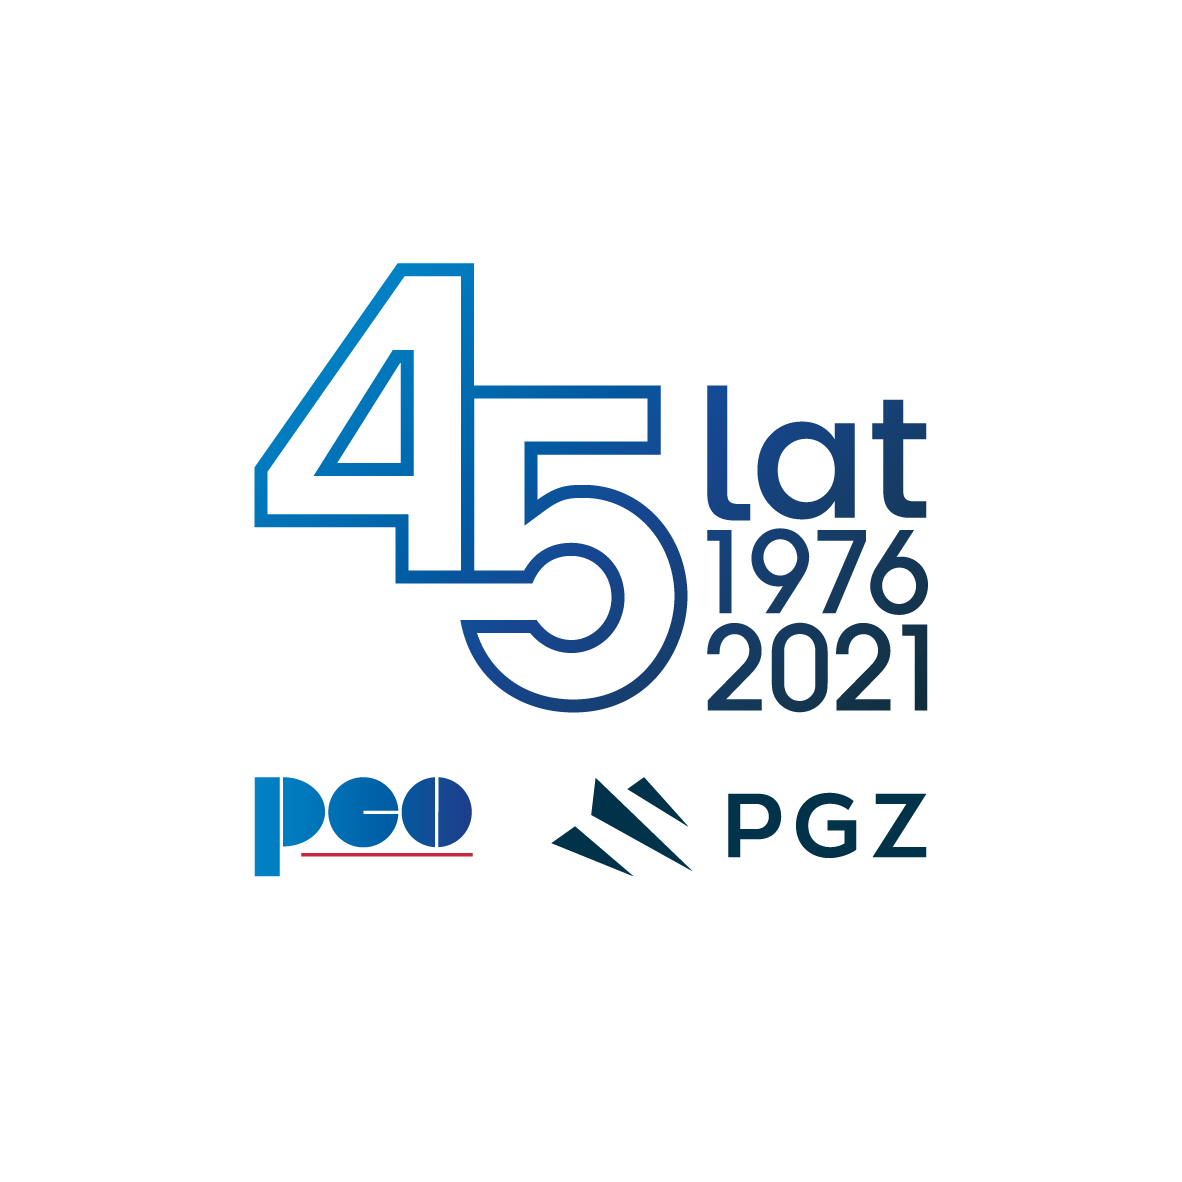 https://pcosa.com.pl/wp-content/uploads/2021/01/PCO-logo-45-lat-w-v8.png